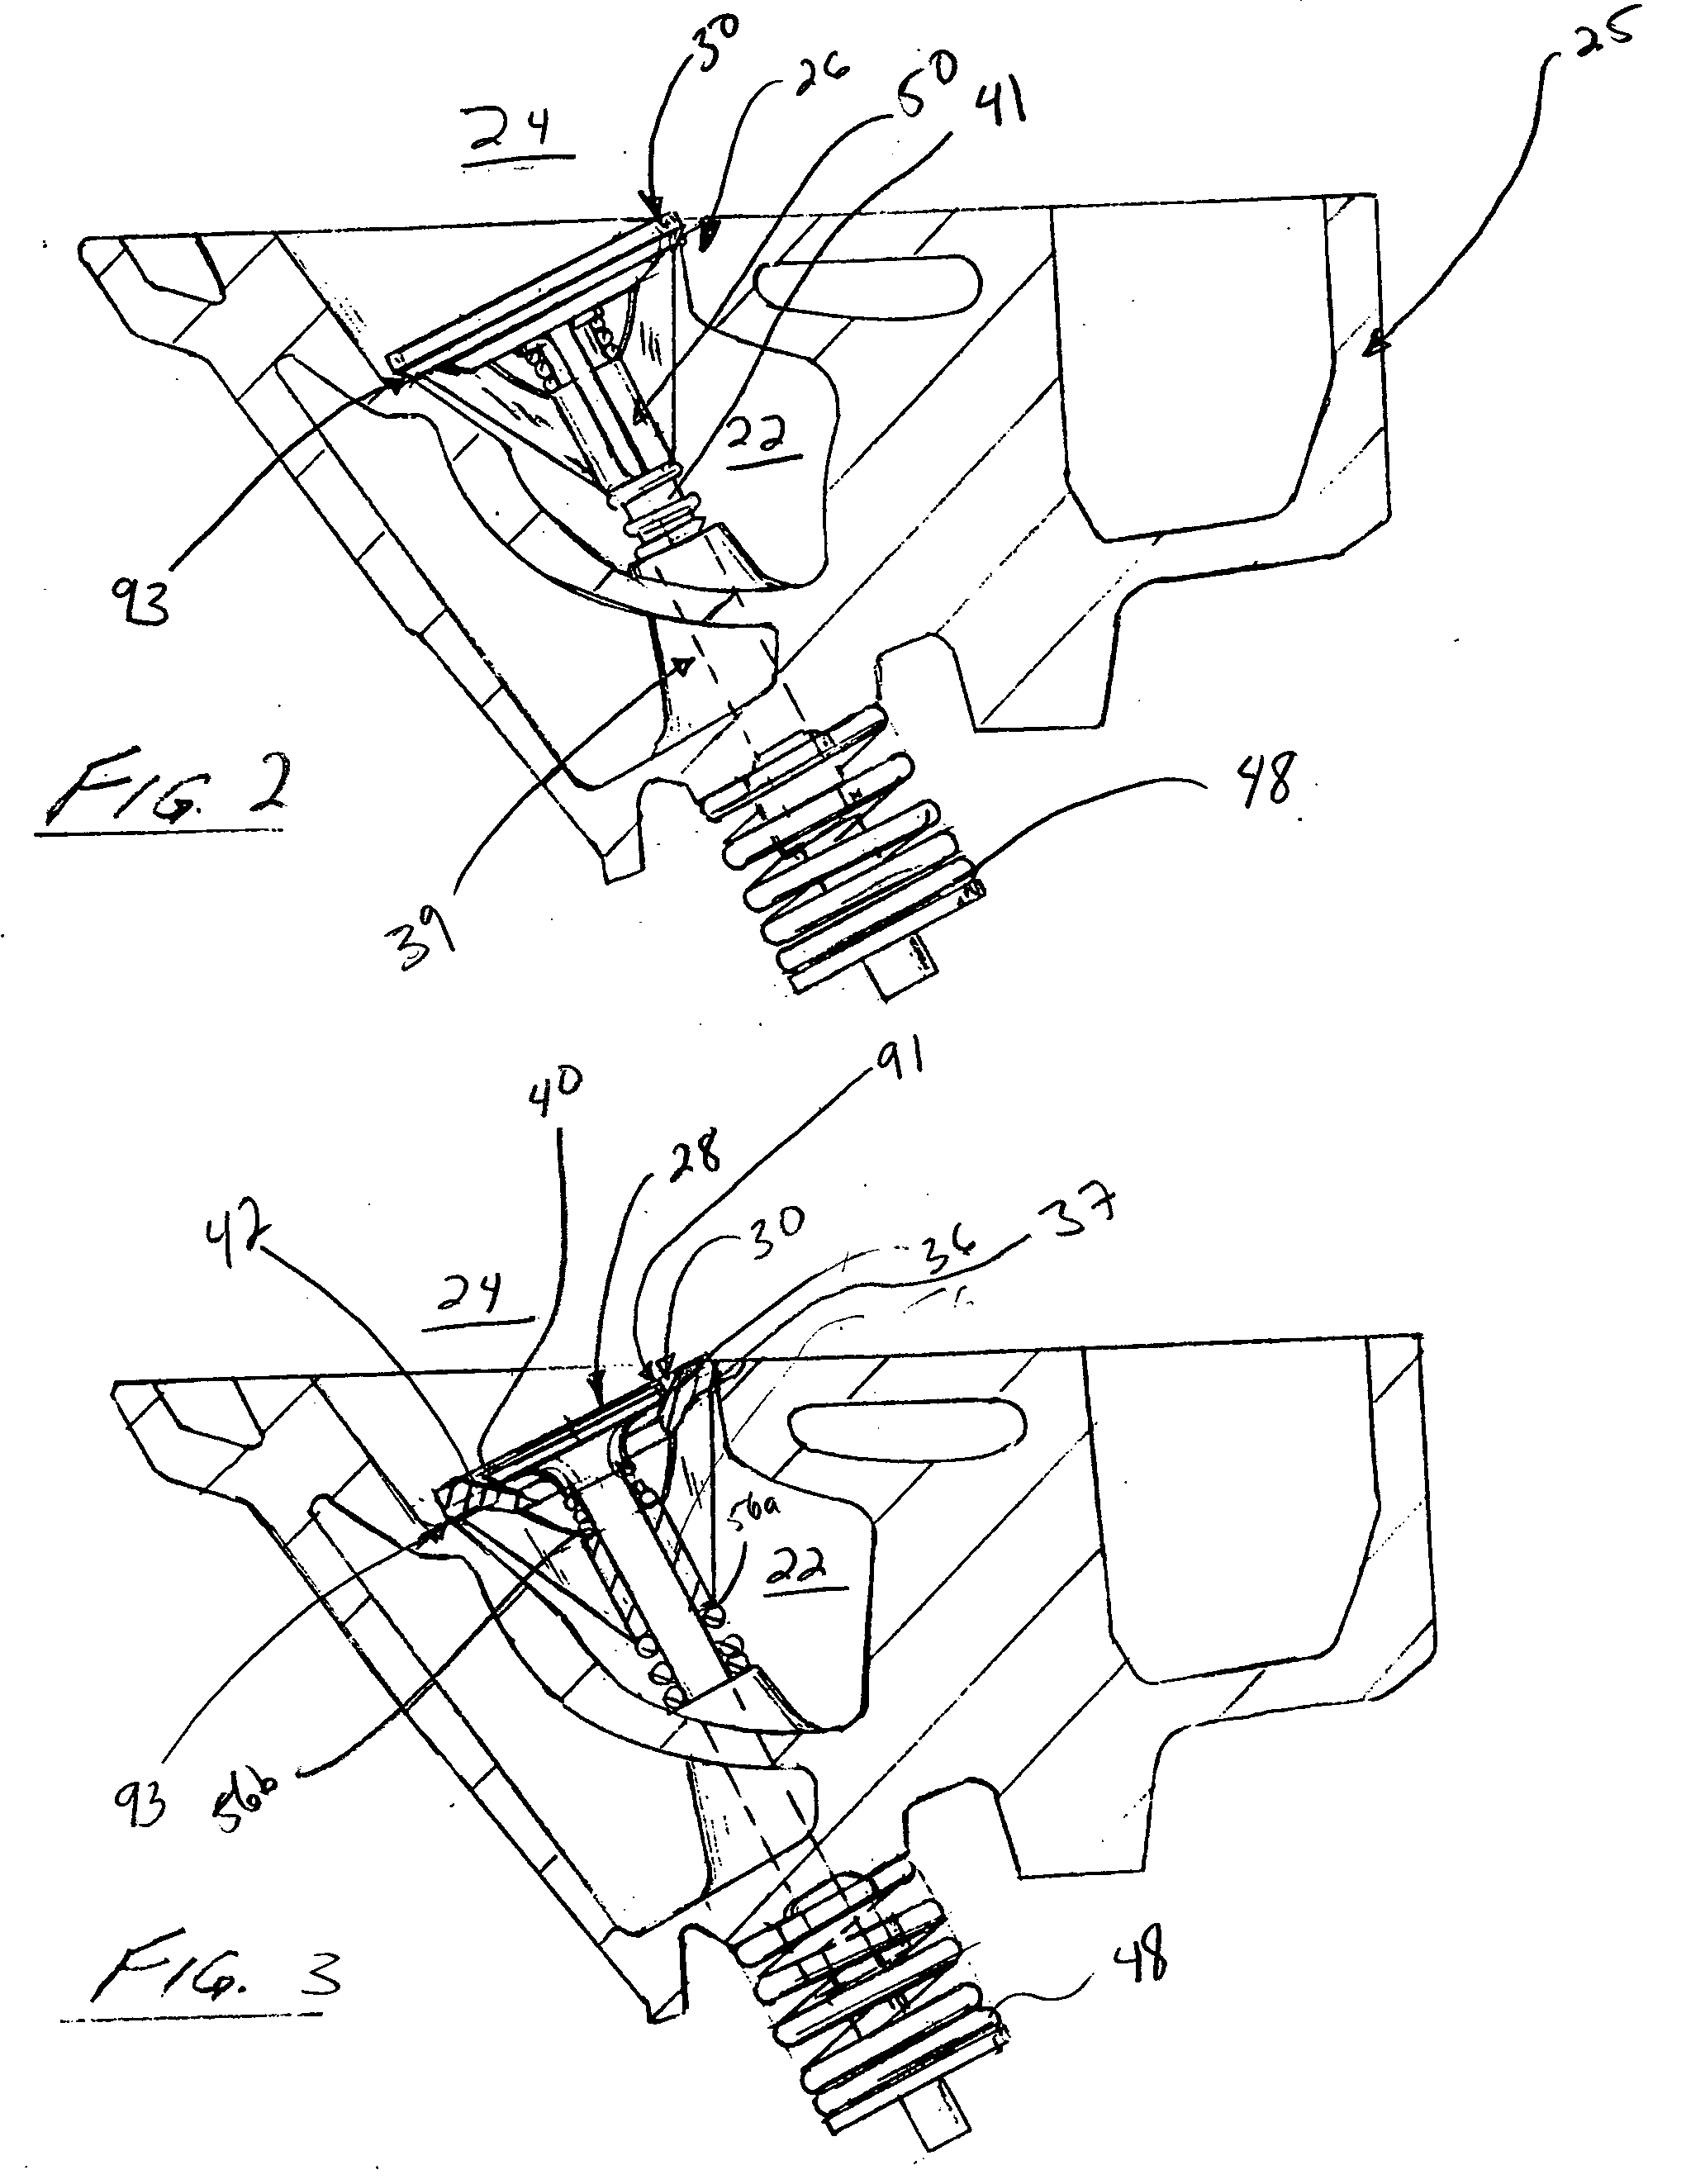 Coaxial poppet valve